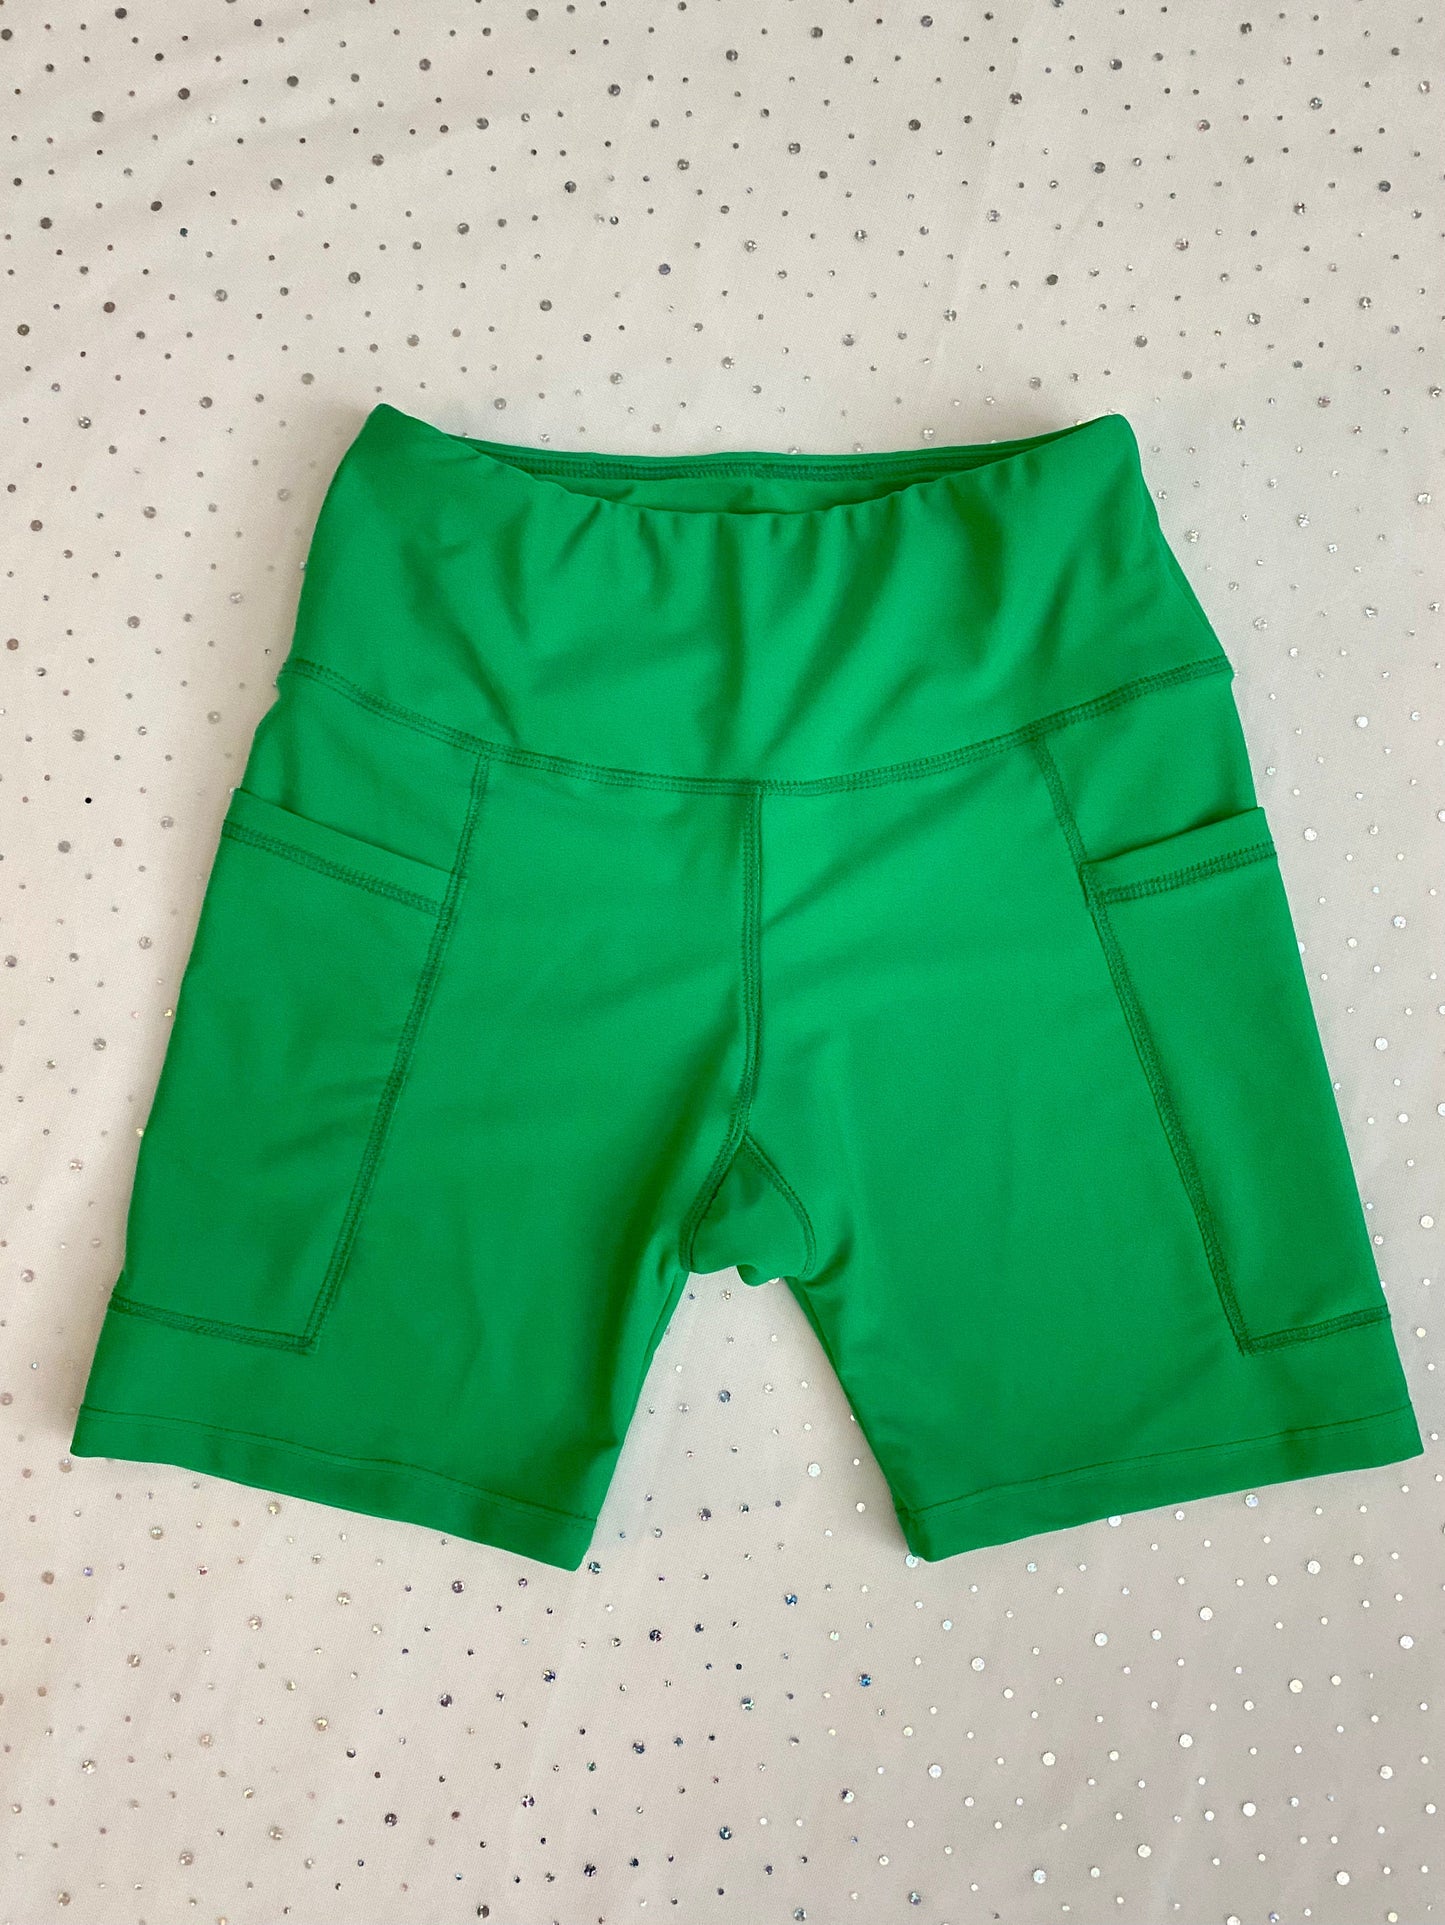 Custom shorts 6" inseam